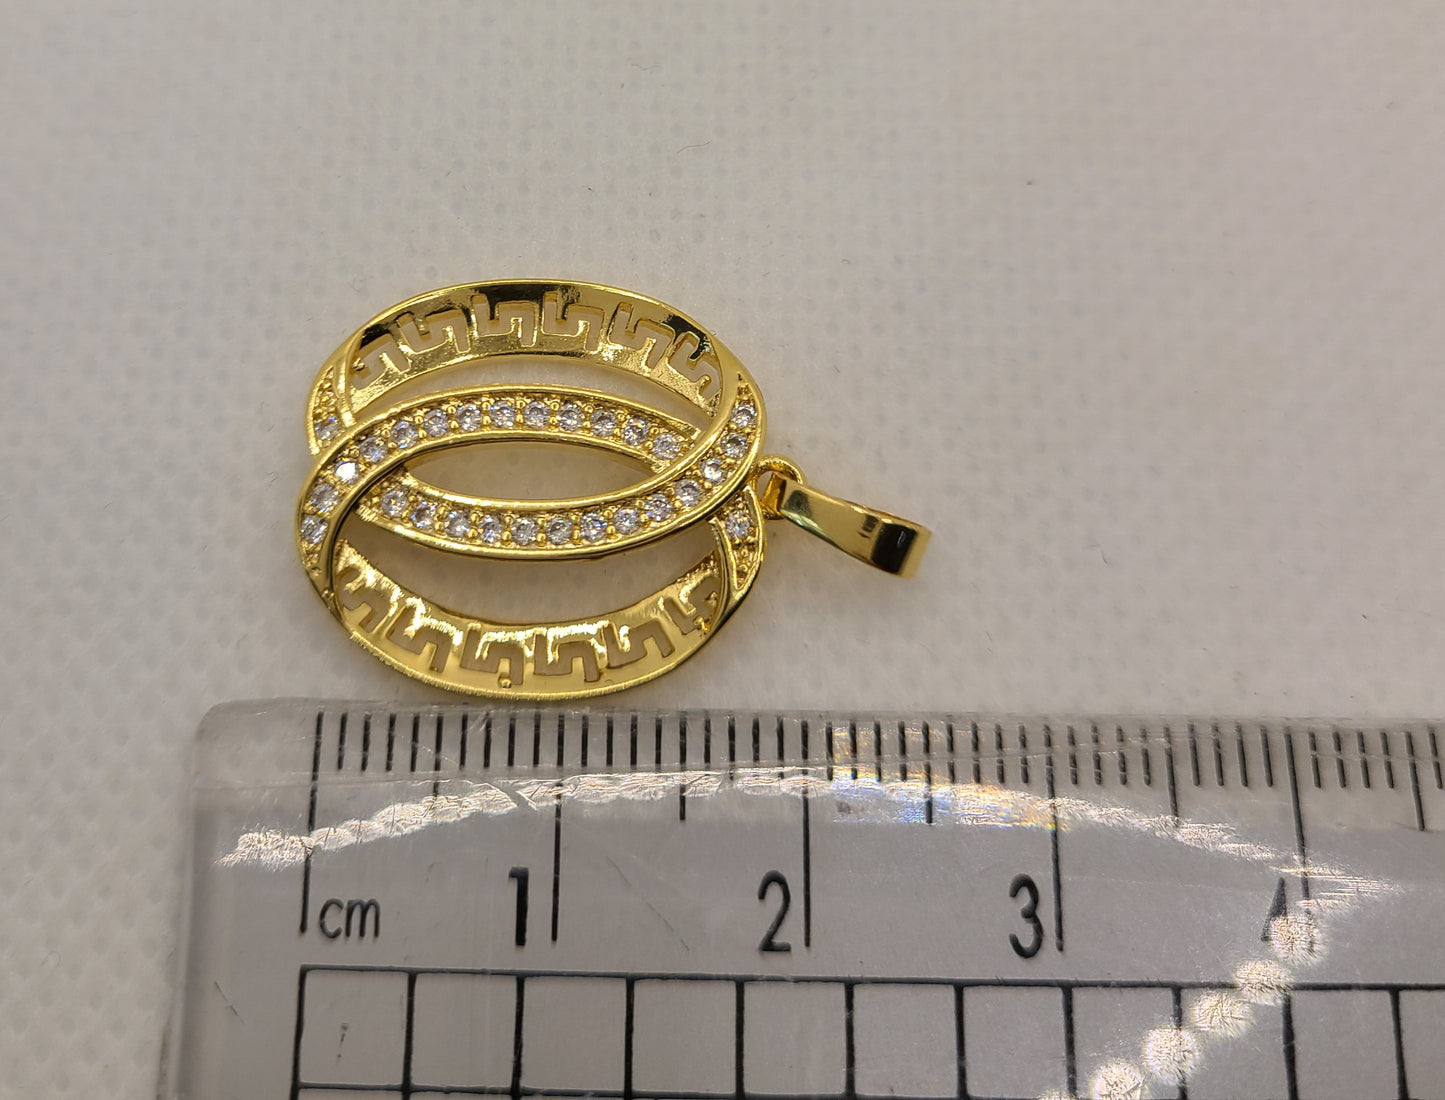 Gold pated versace design pendants